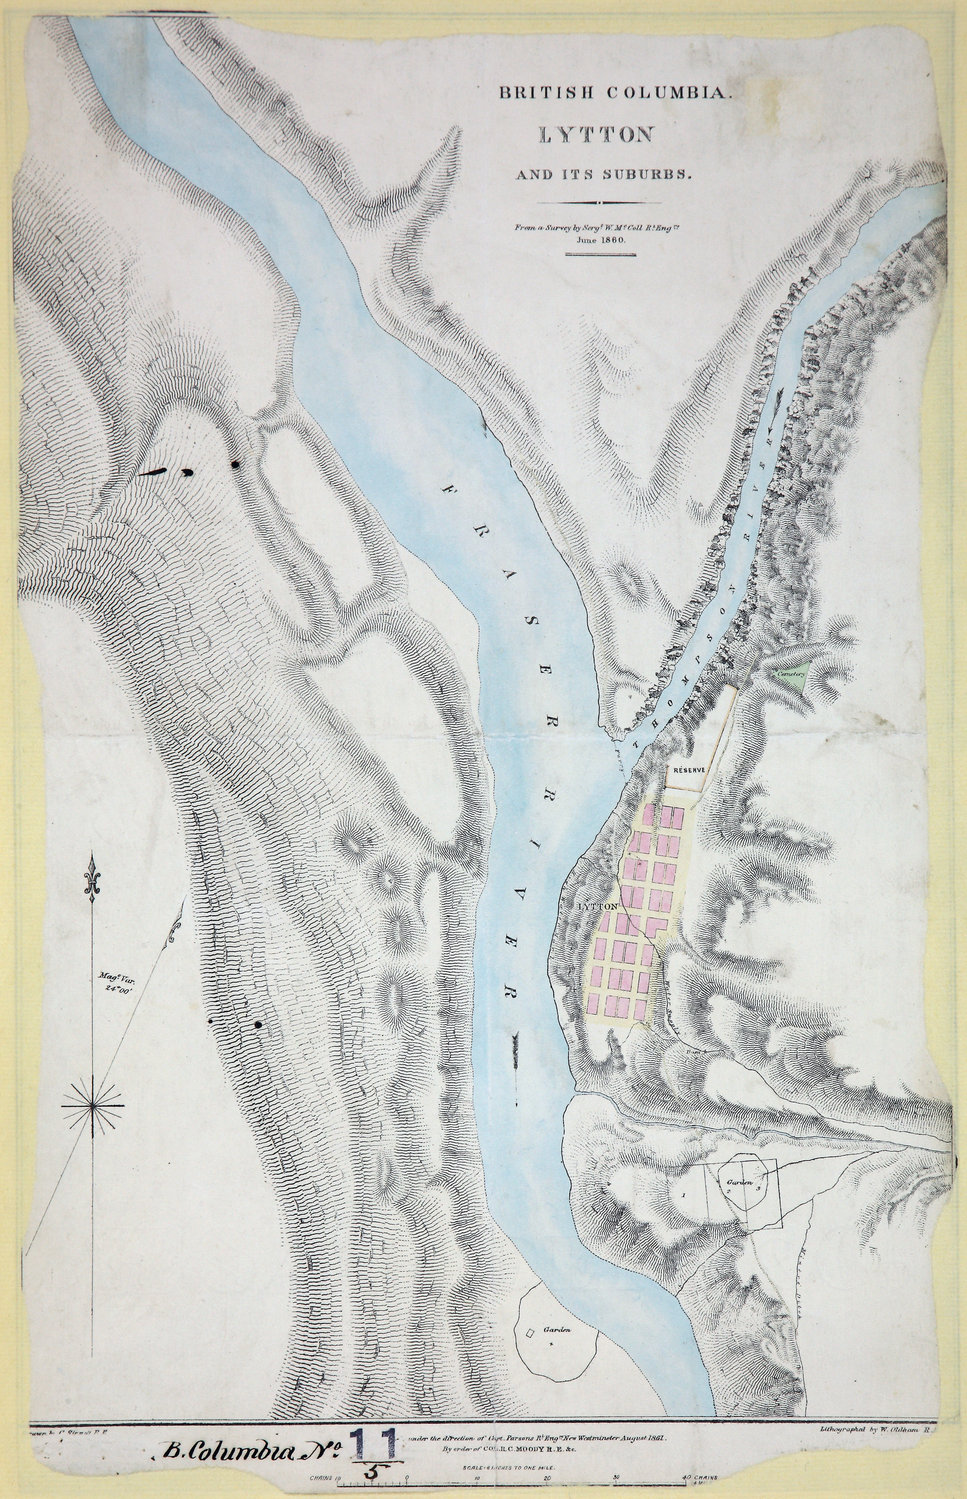 Lytton and its Suburbs, 1860.